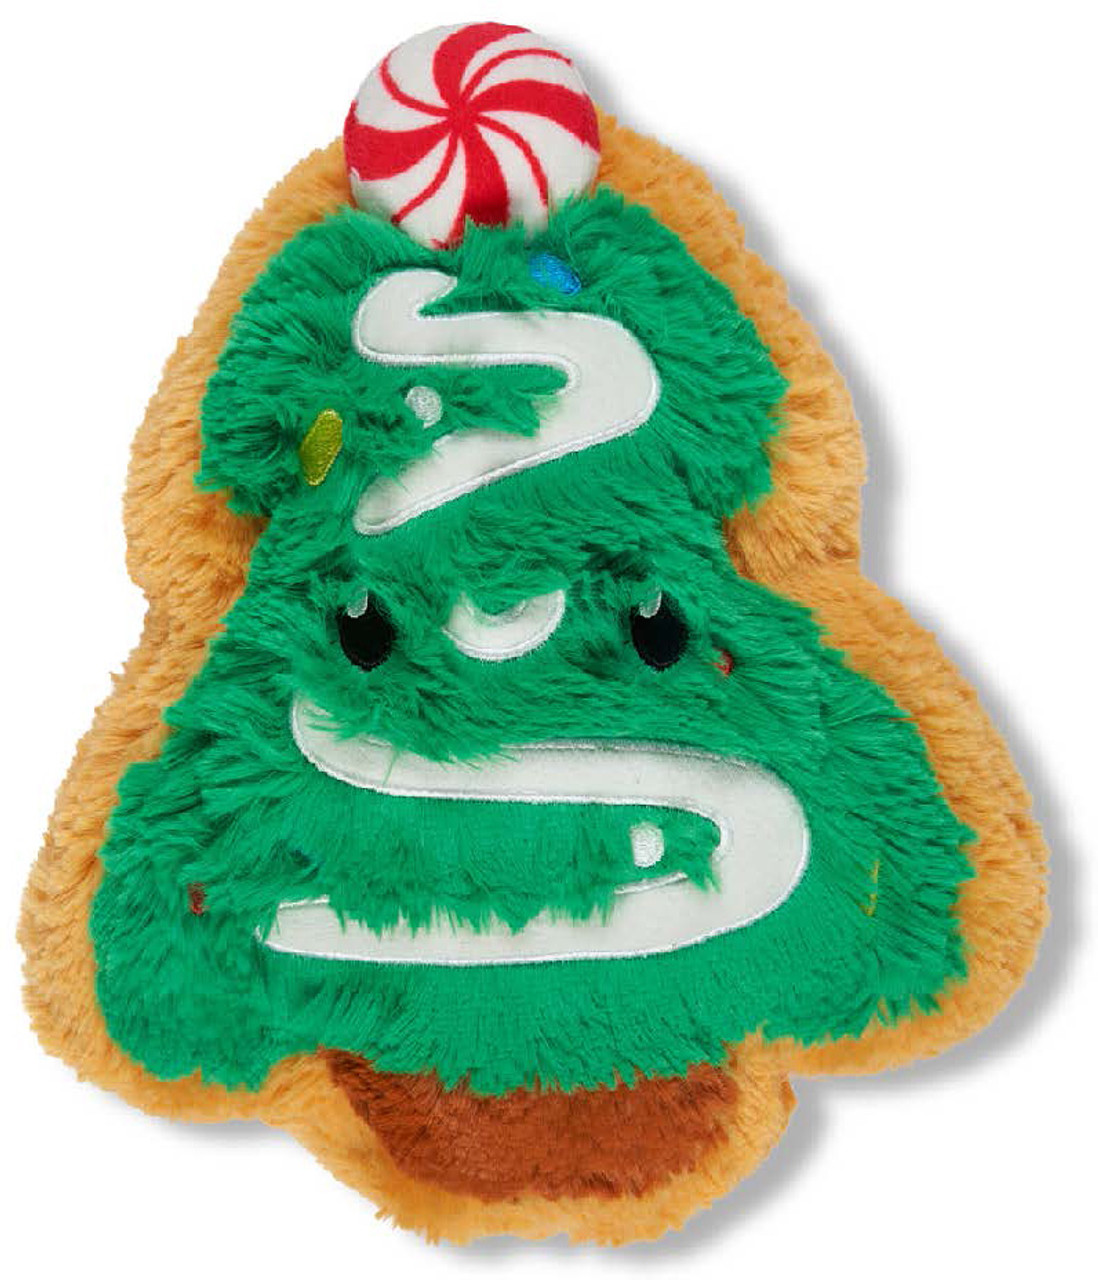 Mini Squishable Christmas Tree Cookie 2